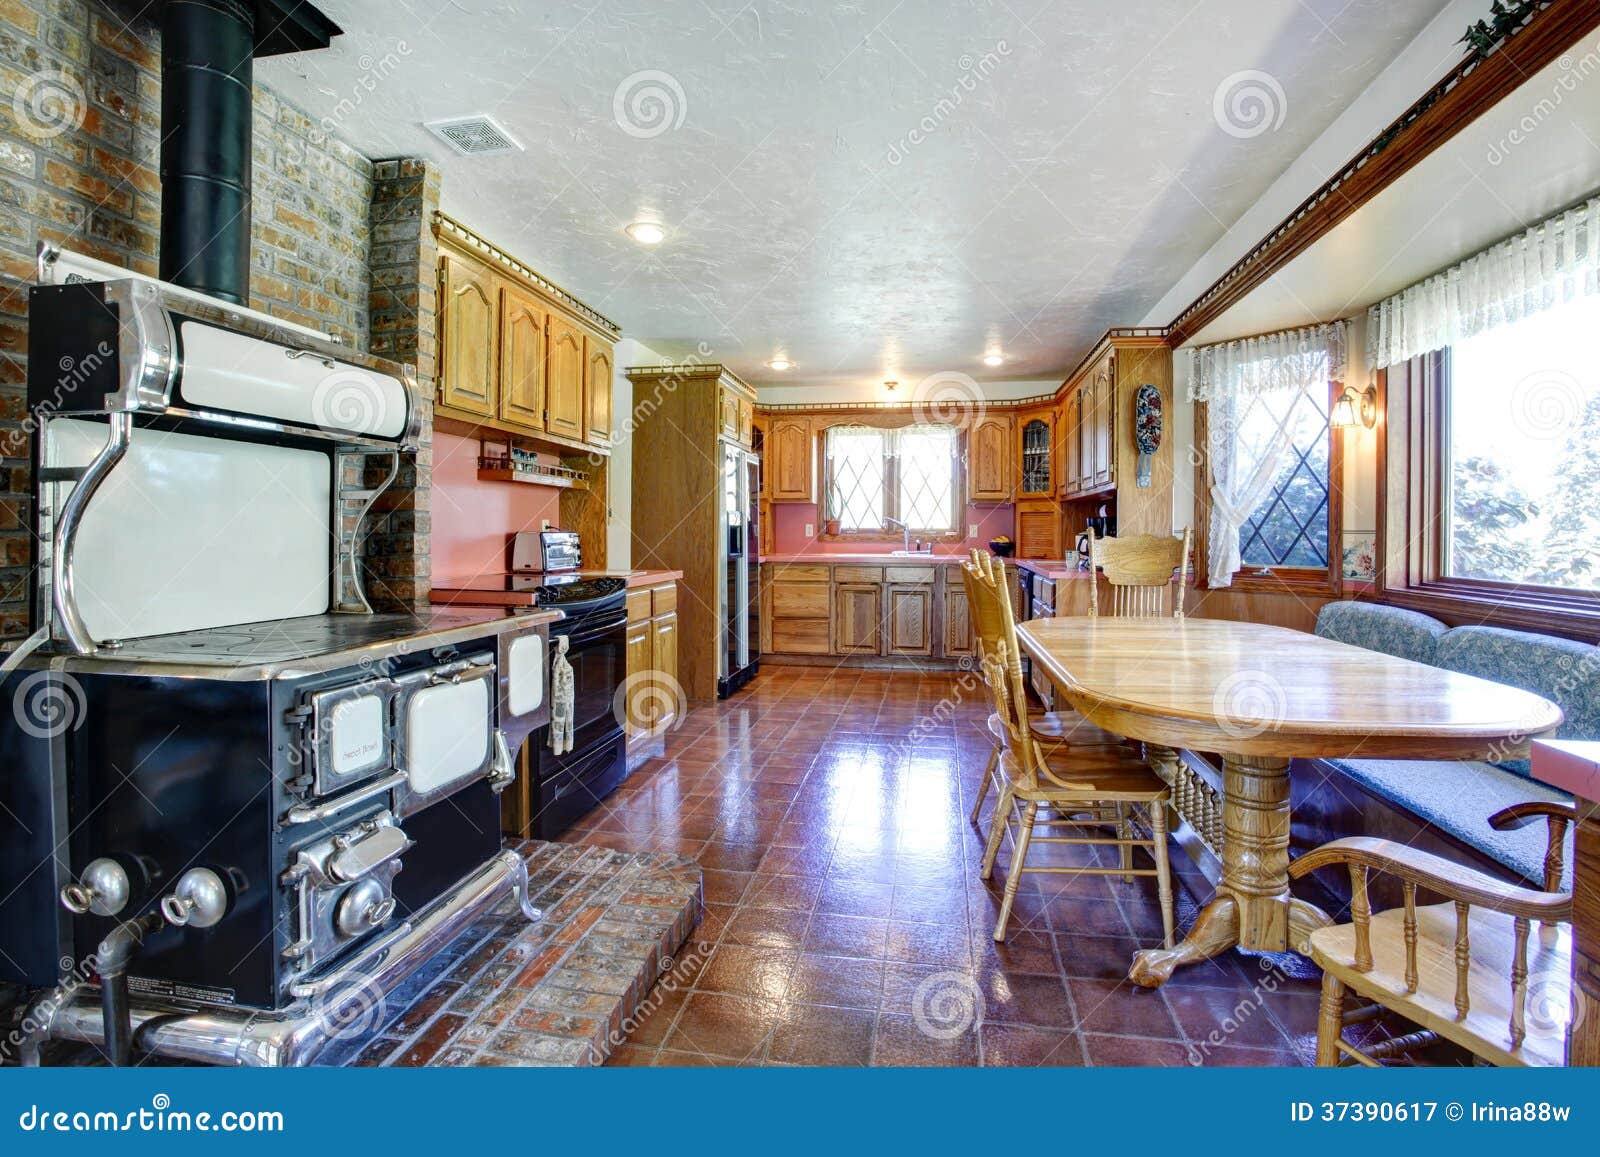 Impressive Farmhouse Kitchen Room With Antique Stove 